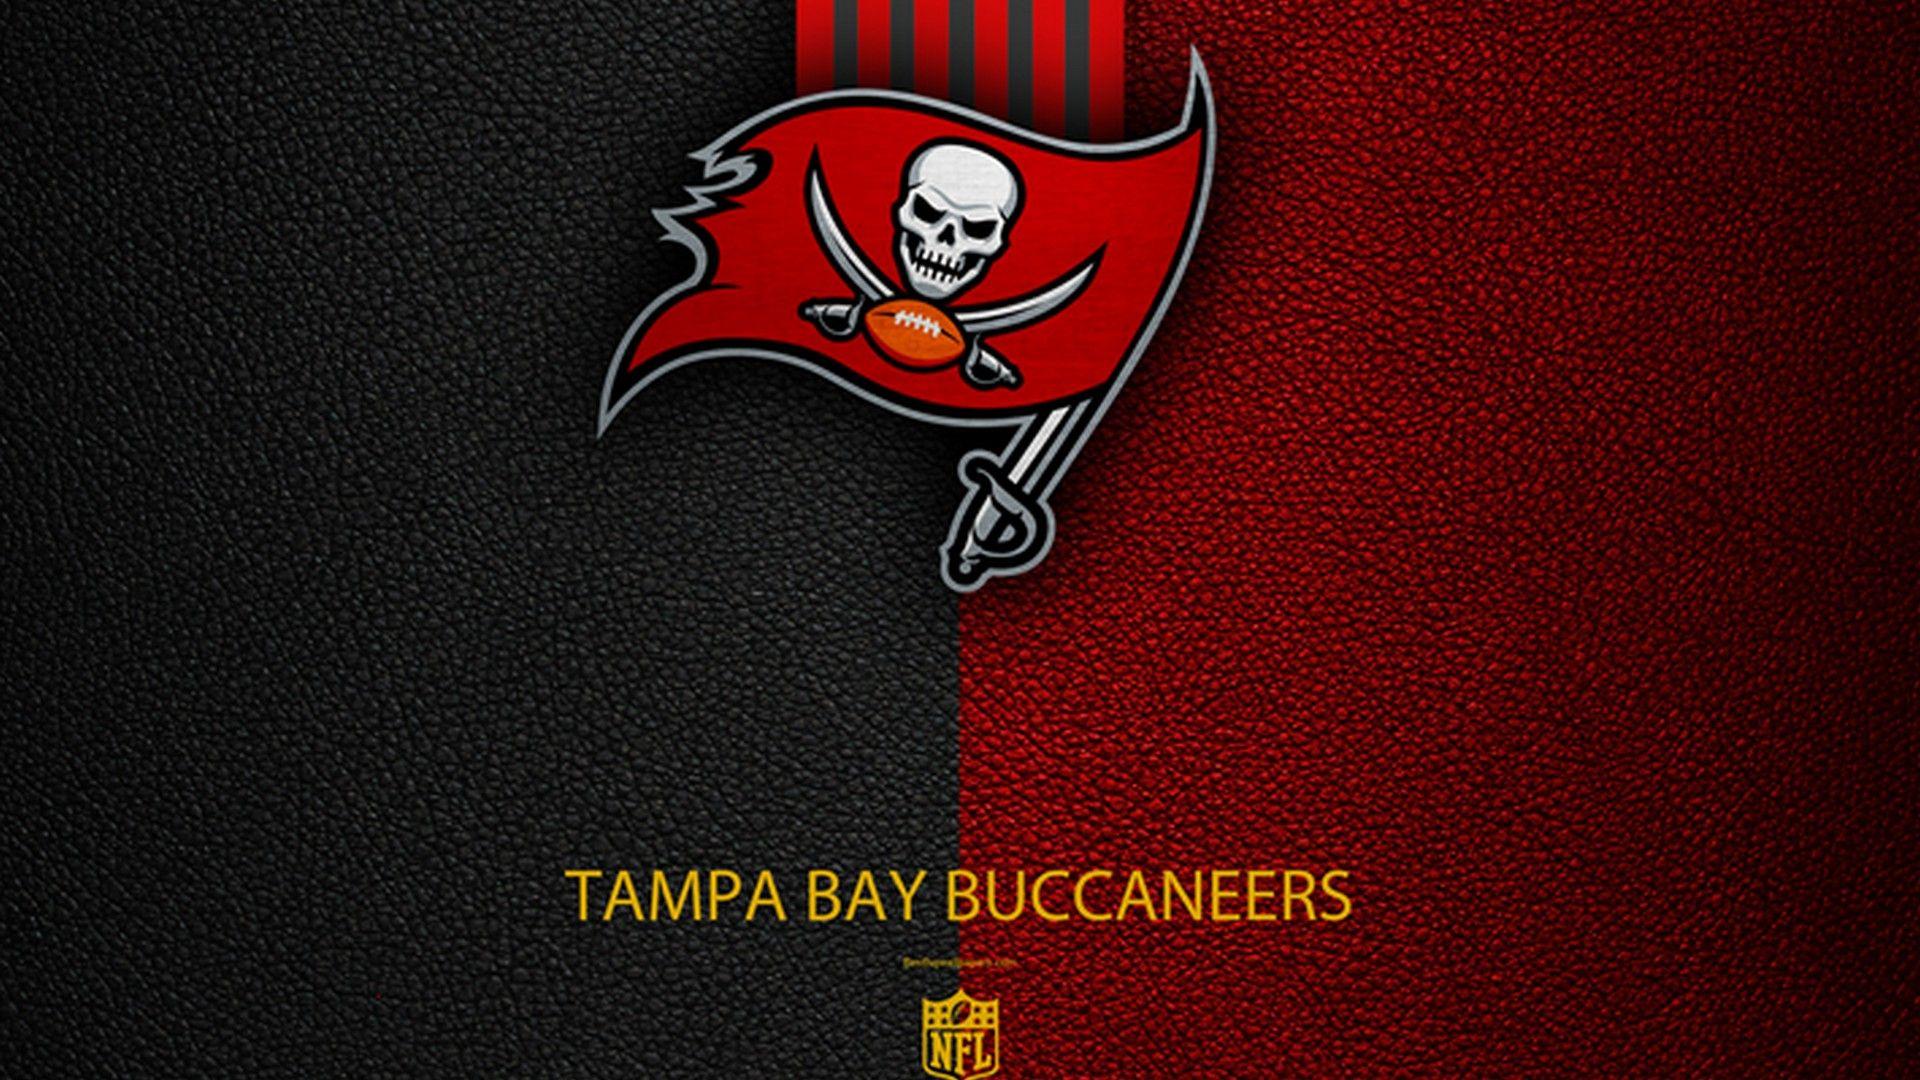 Tampa Bay Buccaneers Wallpapers - Top Hình Ảnh Đẹp